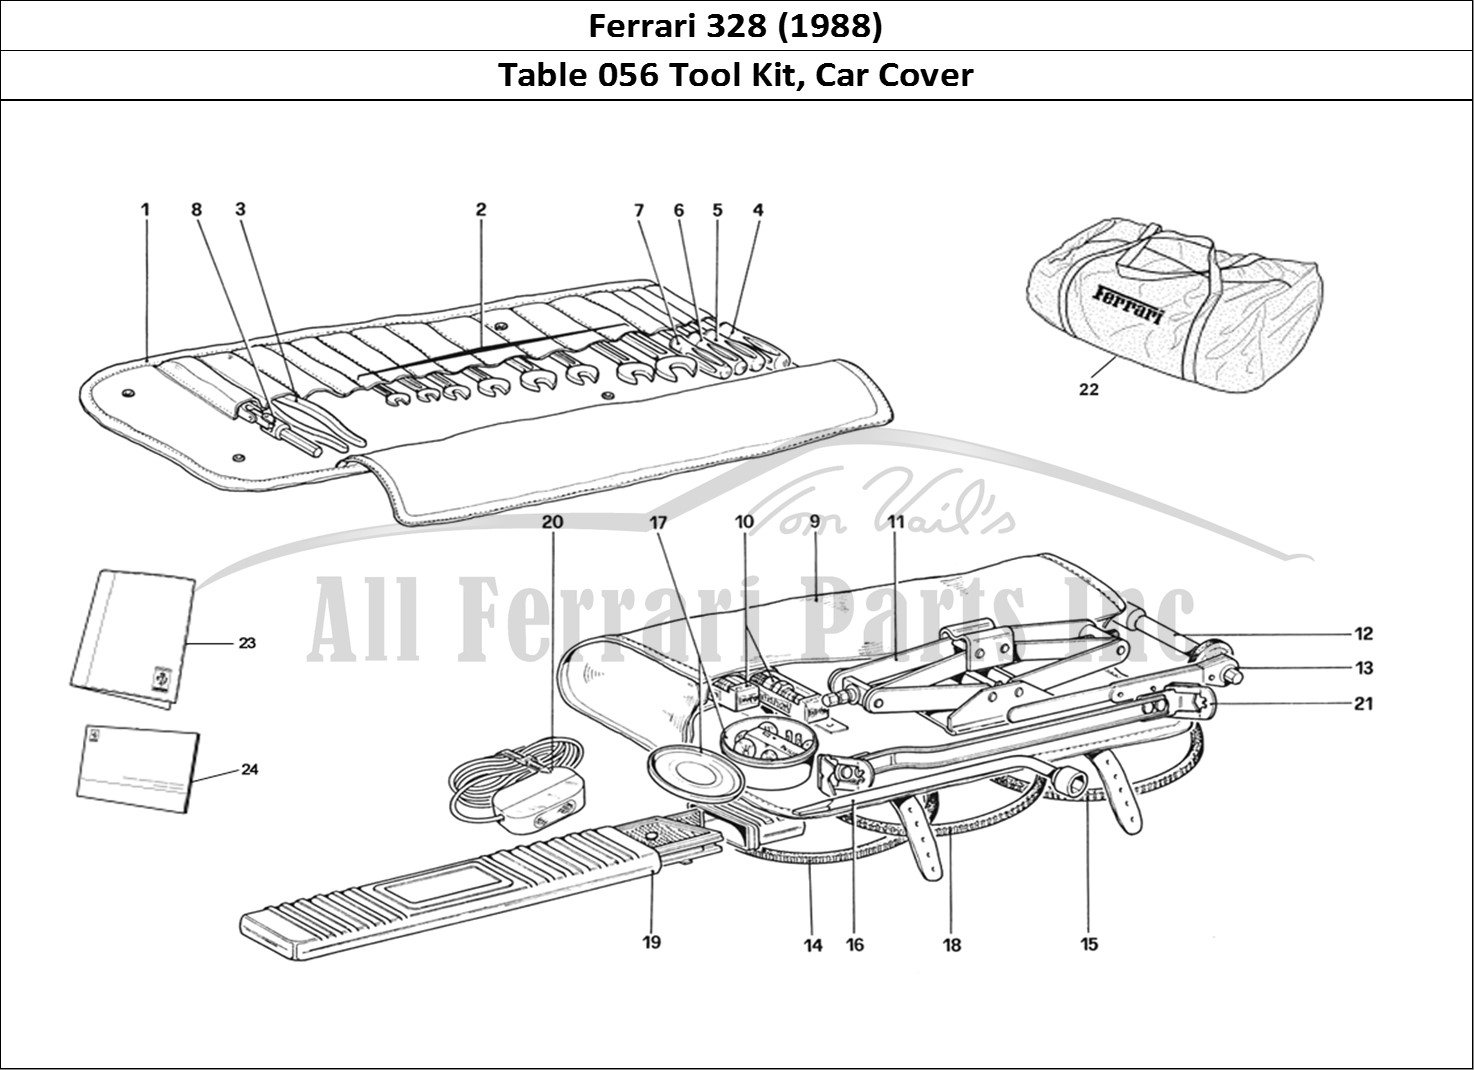 Ferrari Parts Ferrari 328 (1988) Page 056 Tool Kit & Car Cover